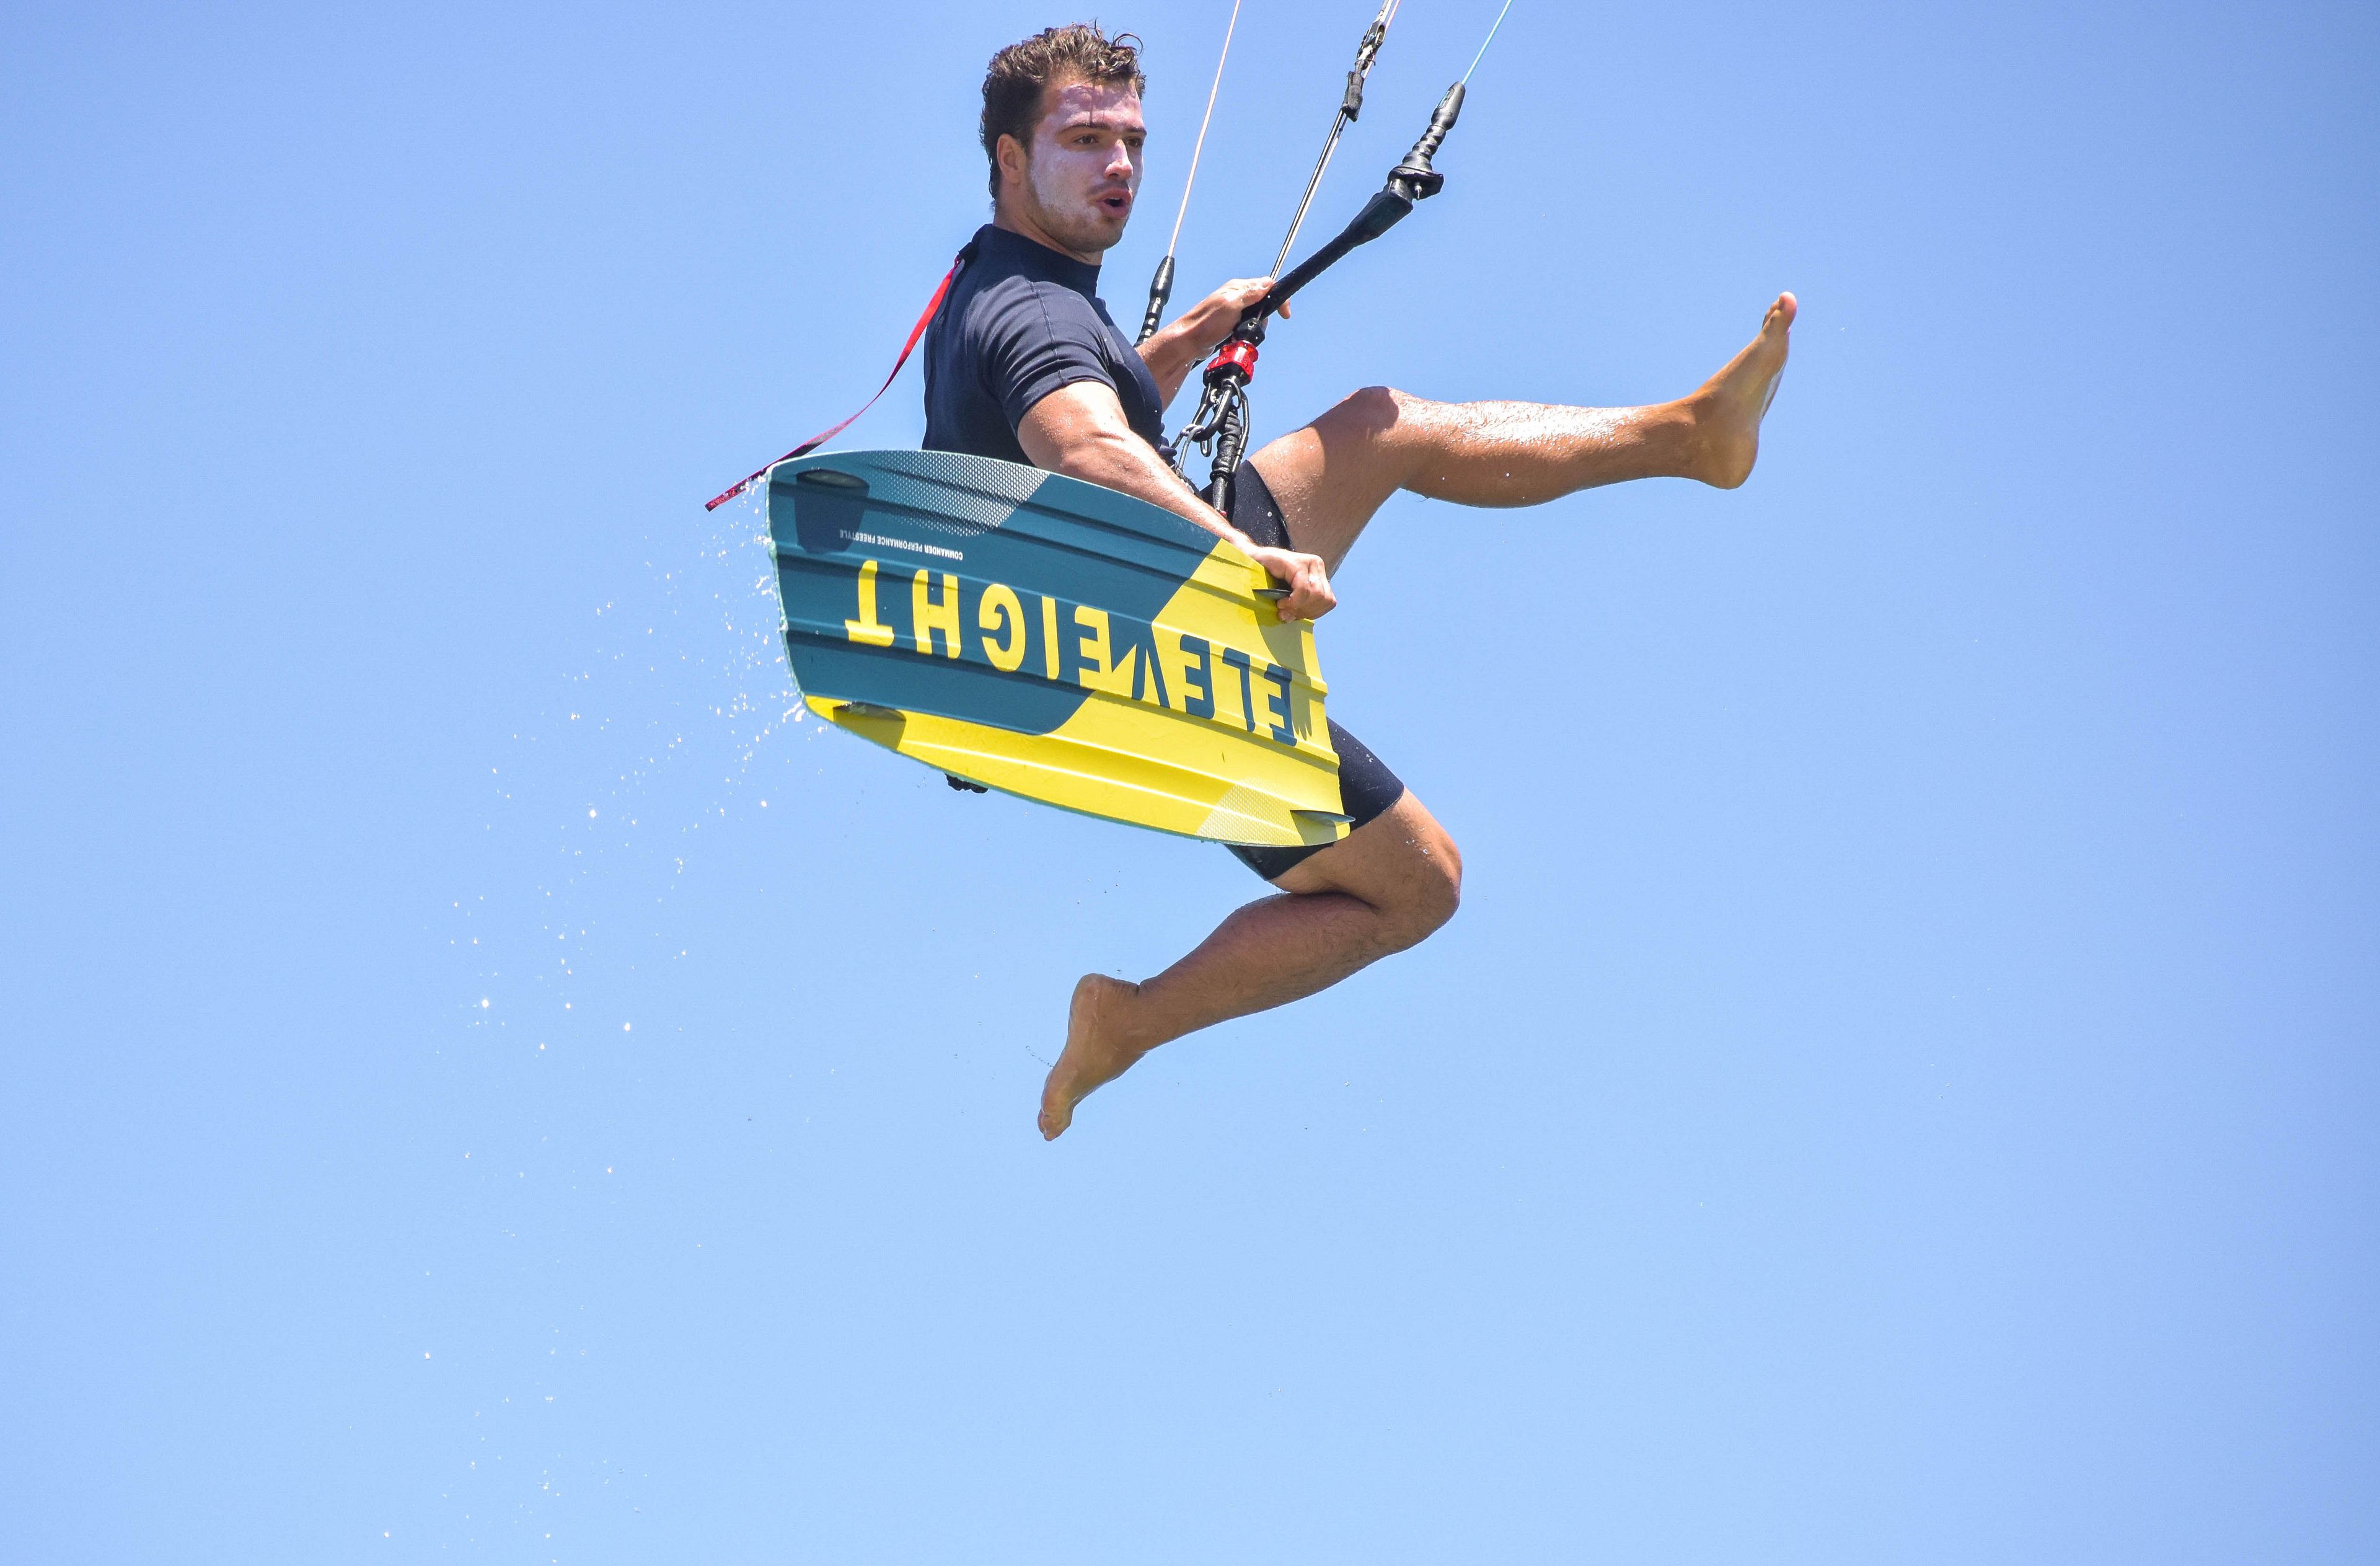 board off trick kitesurfing